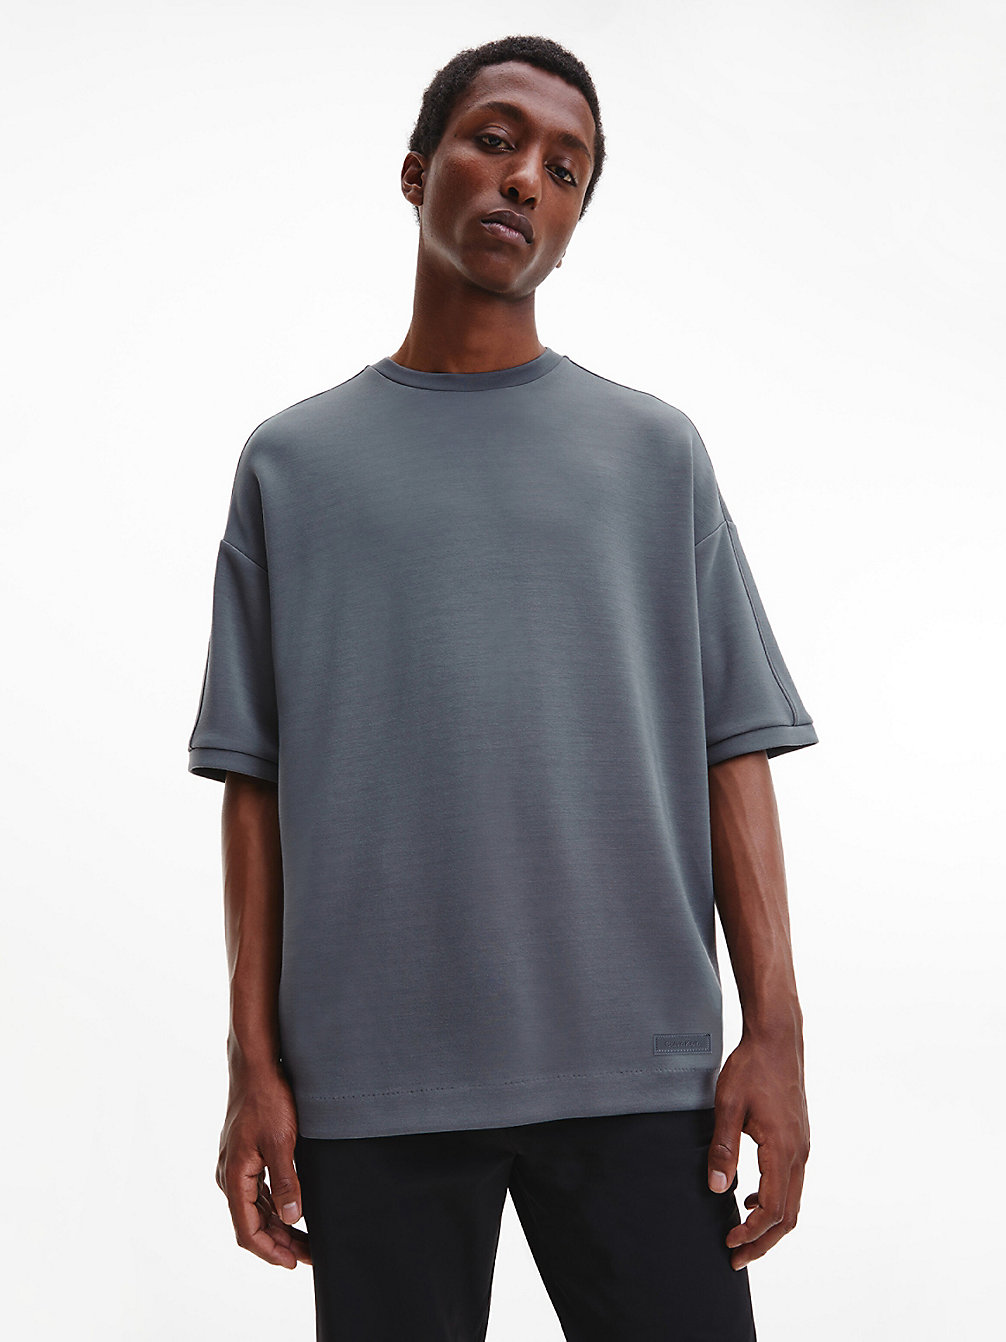 MEDIUM CHARCOAL > Swobodny Miękki T-Shirt > undefined Mężczyźni - Calvin Klein